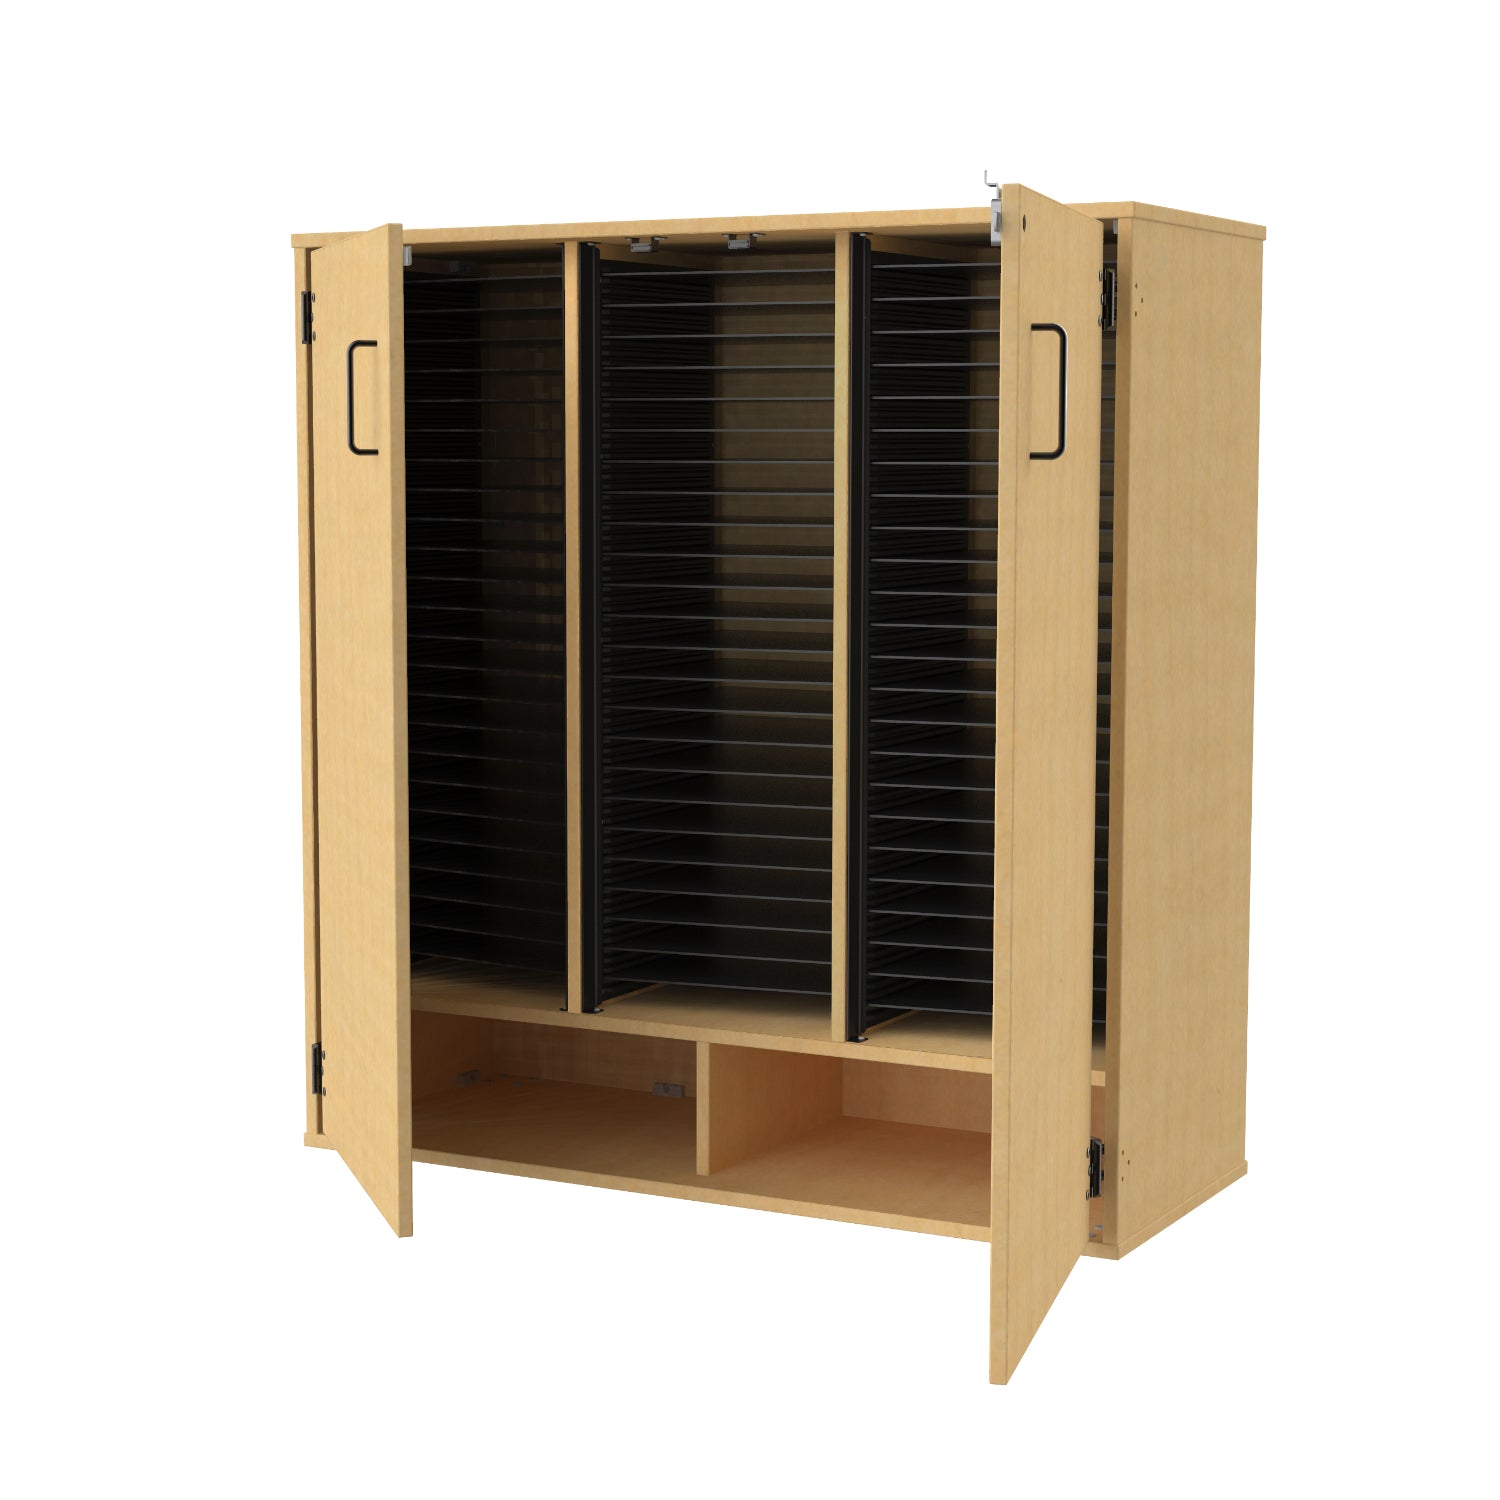 Bandstor™ 3 Compartment Band Folio Cabinet, 77 Shelves, Locking Doors